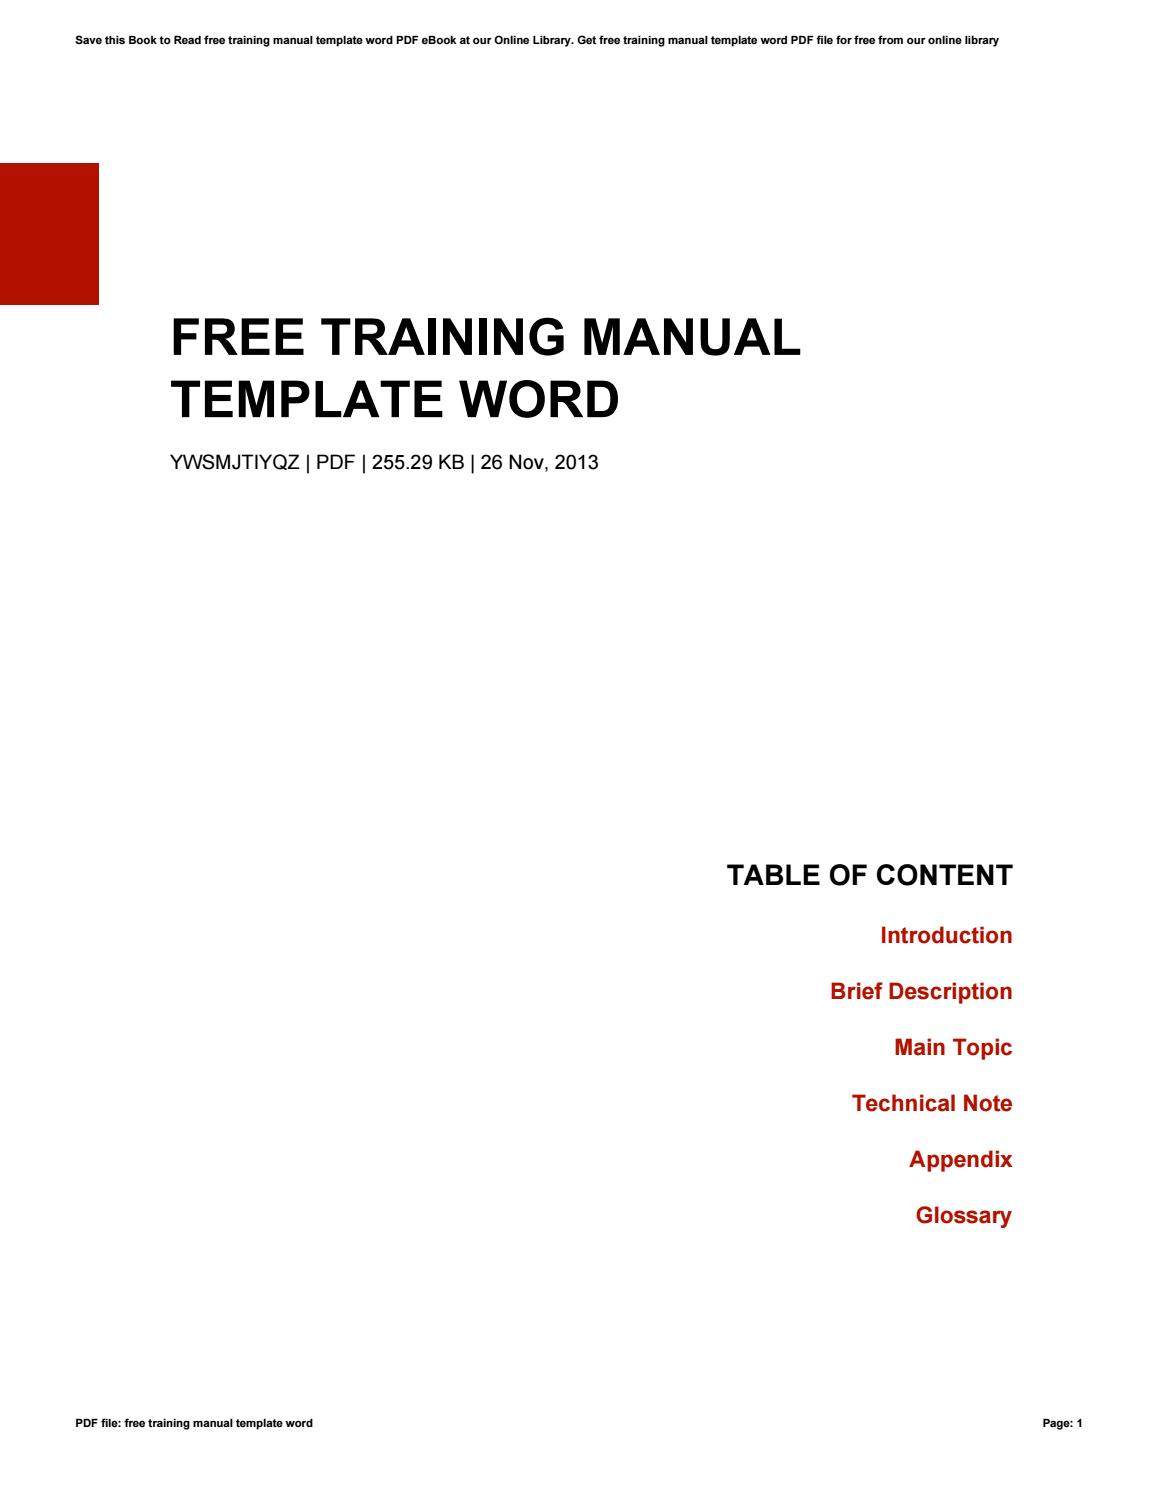 Free Training Manual Template Wordkazelink257 – Issuu Pertaining To Training Documentation Template Word